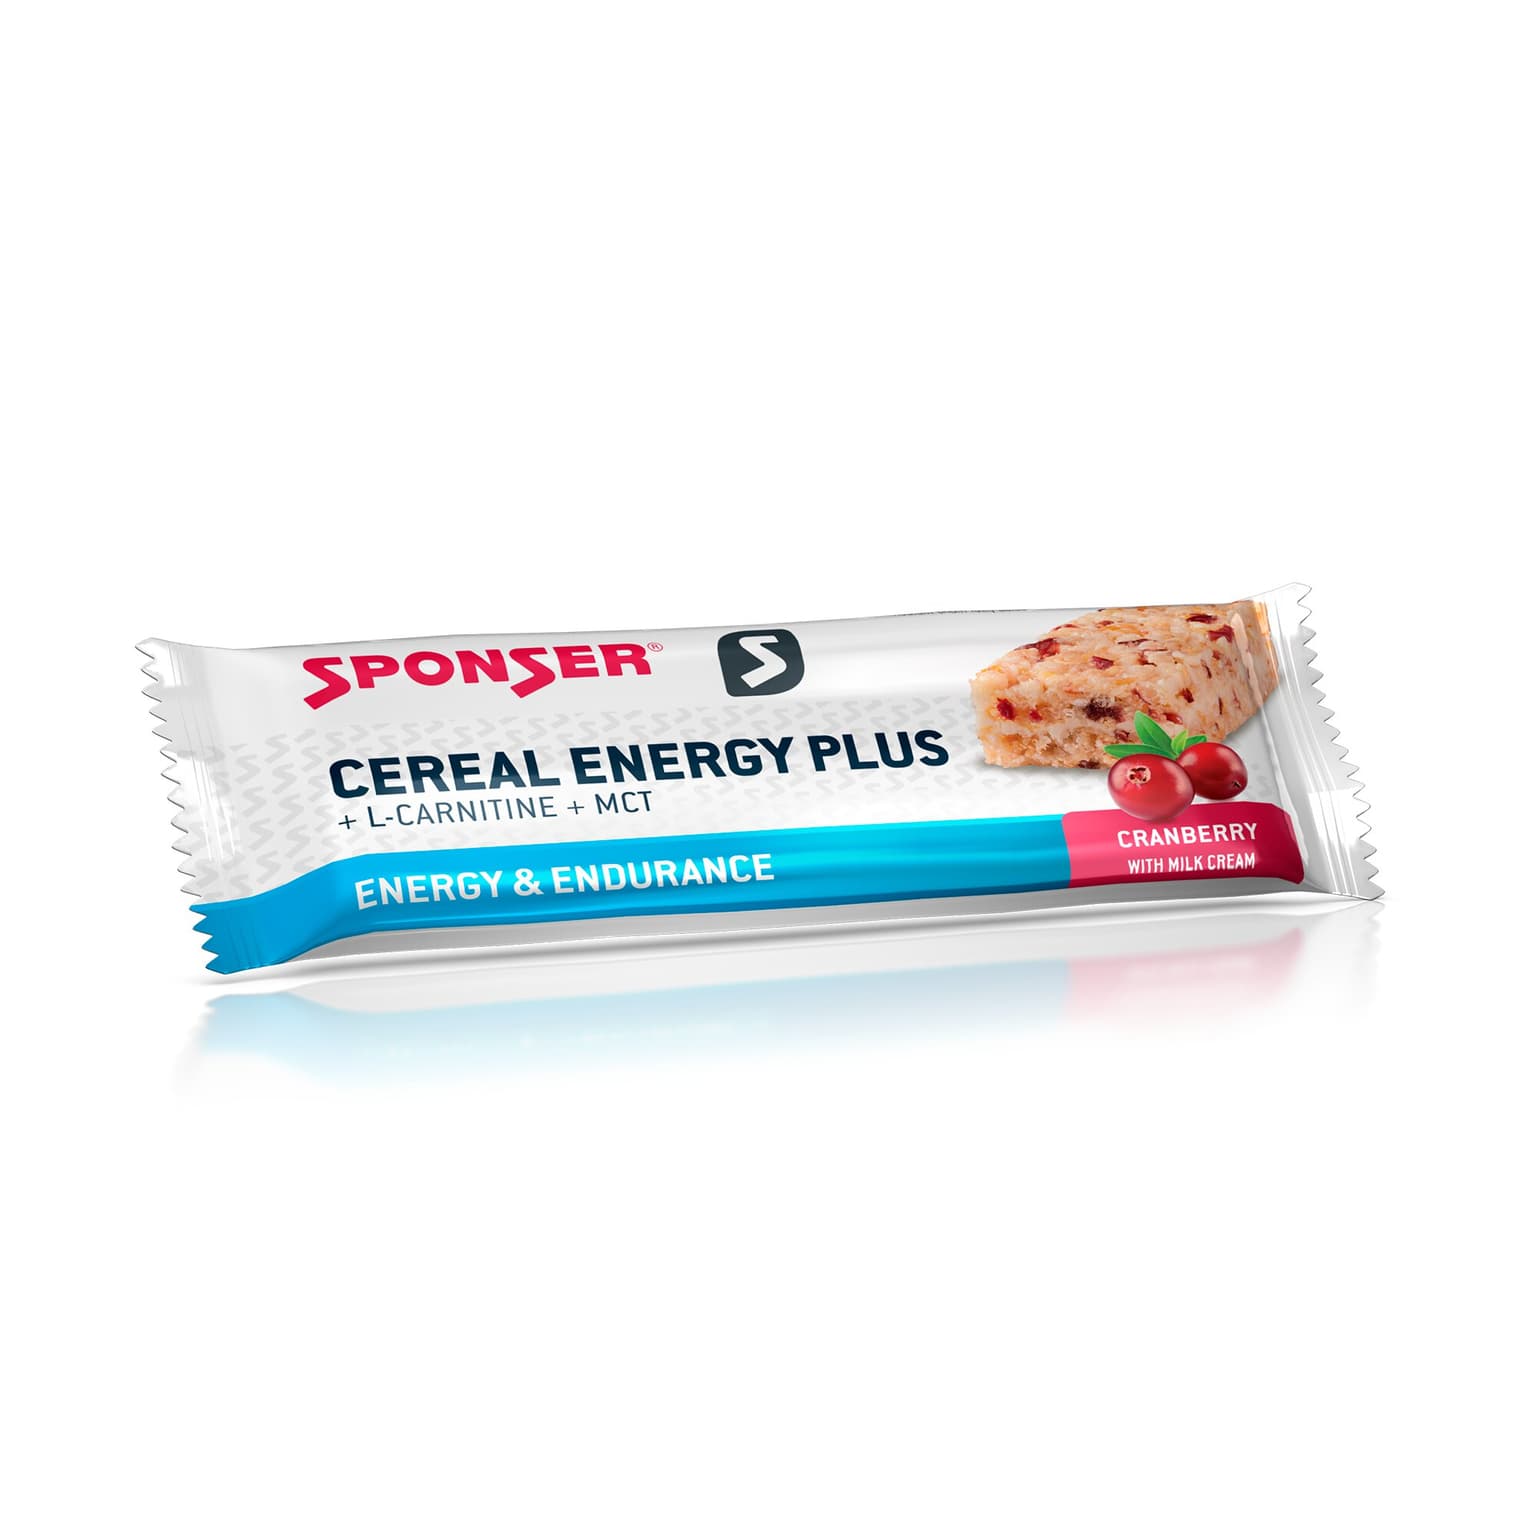 Sponser Sponser Cereal Energy Plus Barrette energetiche 1